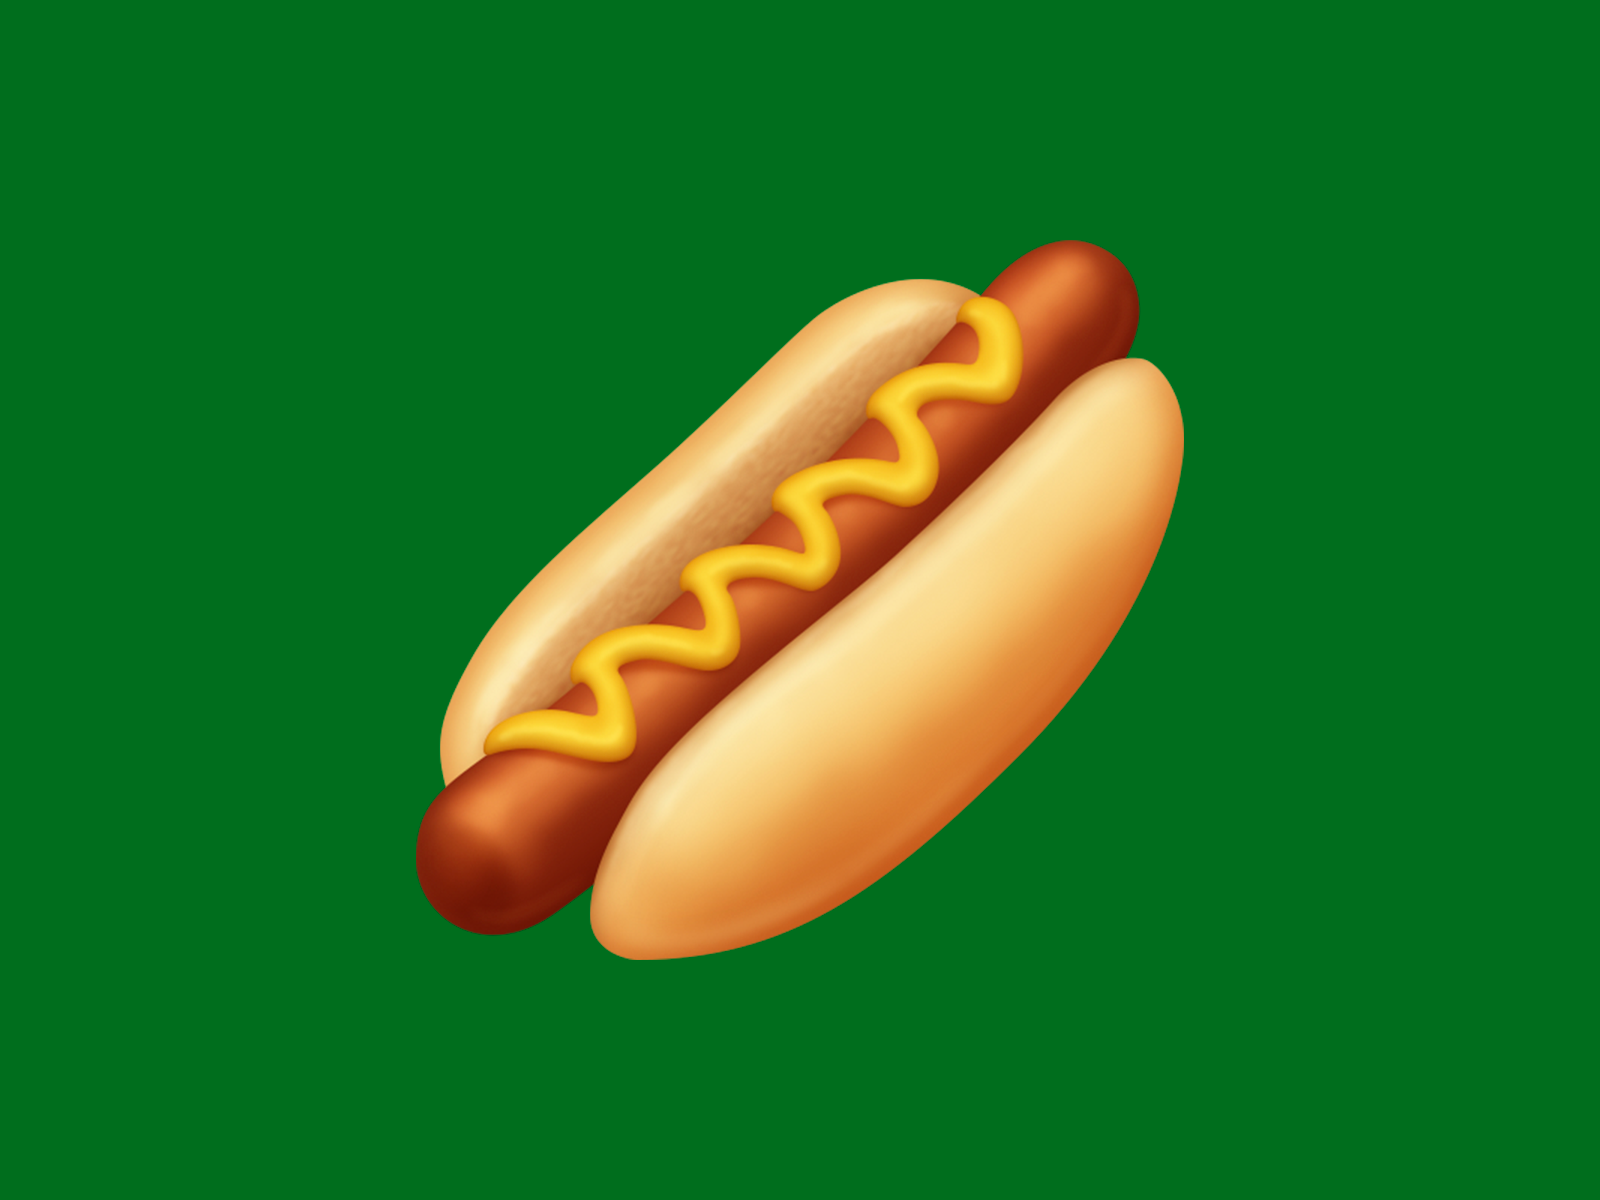 Включи про сосиску. Грин дог хотдог. Сосиски для хот догов. Хот дог на зеленом фоне. Emoji хот дог.